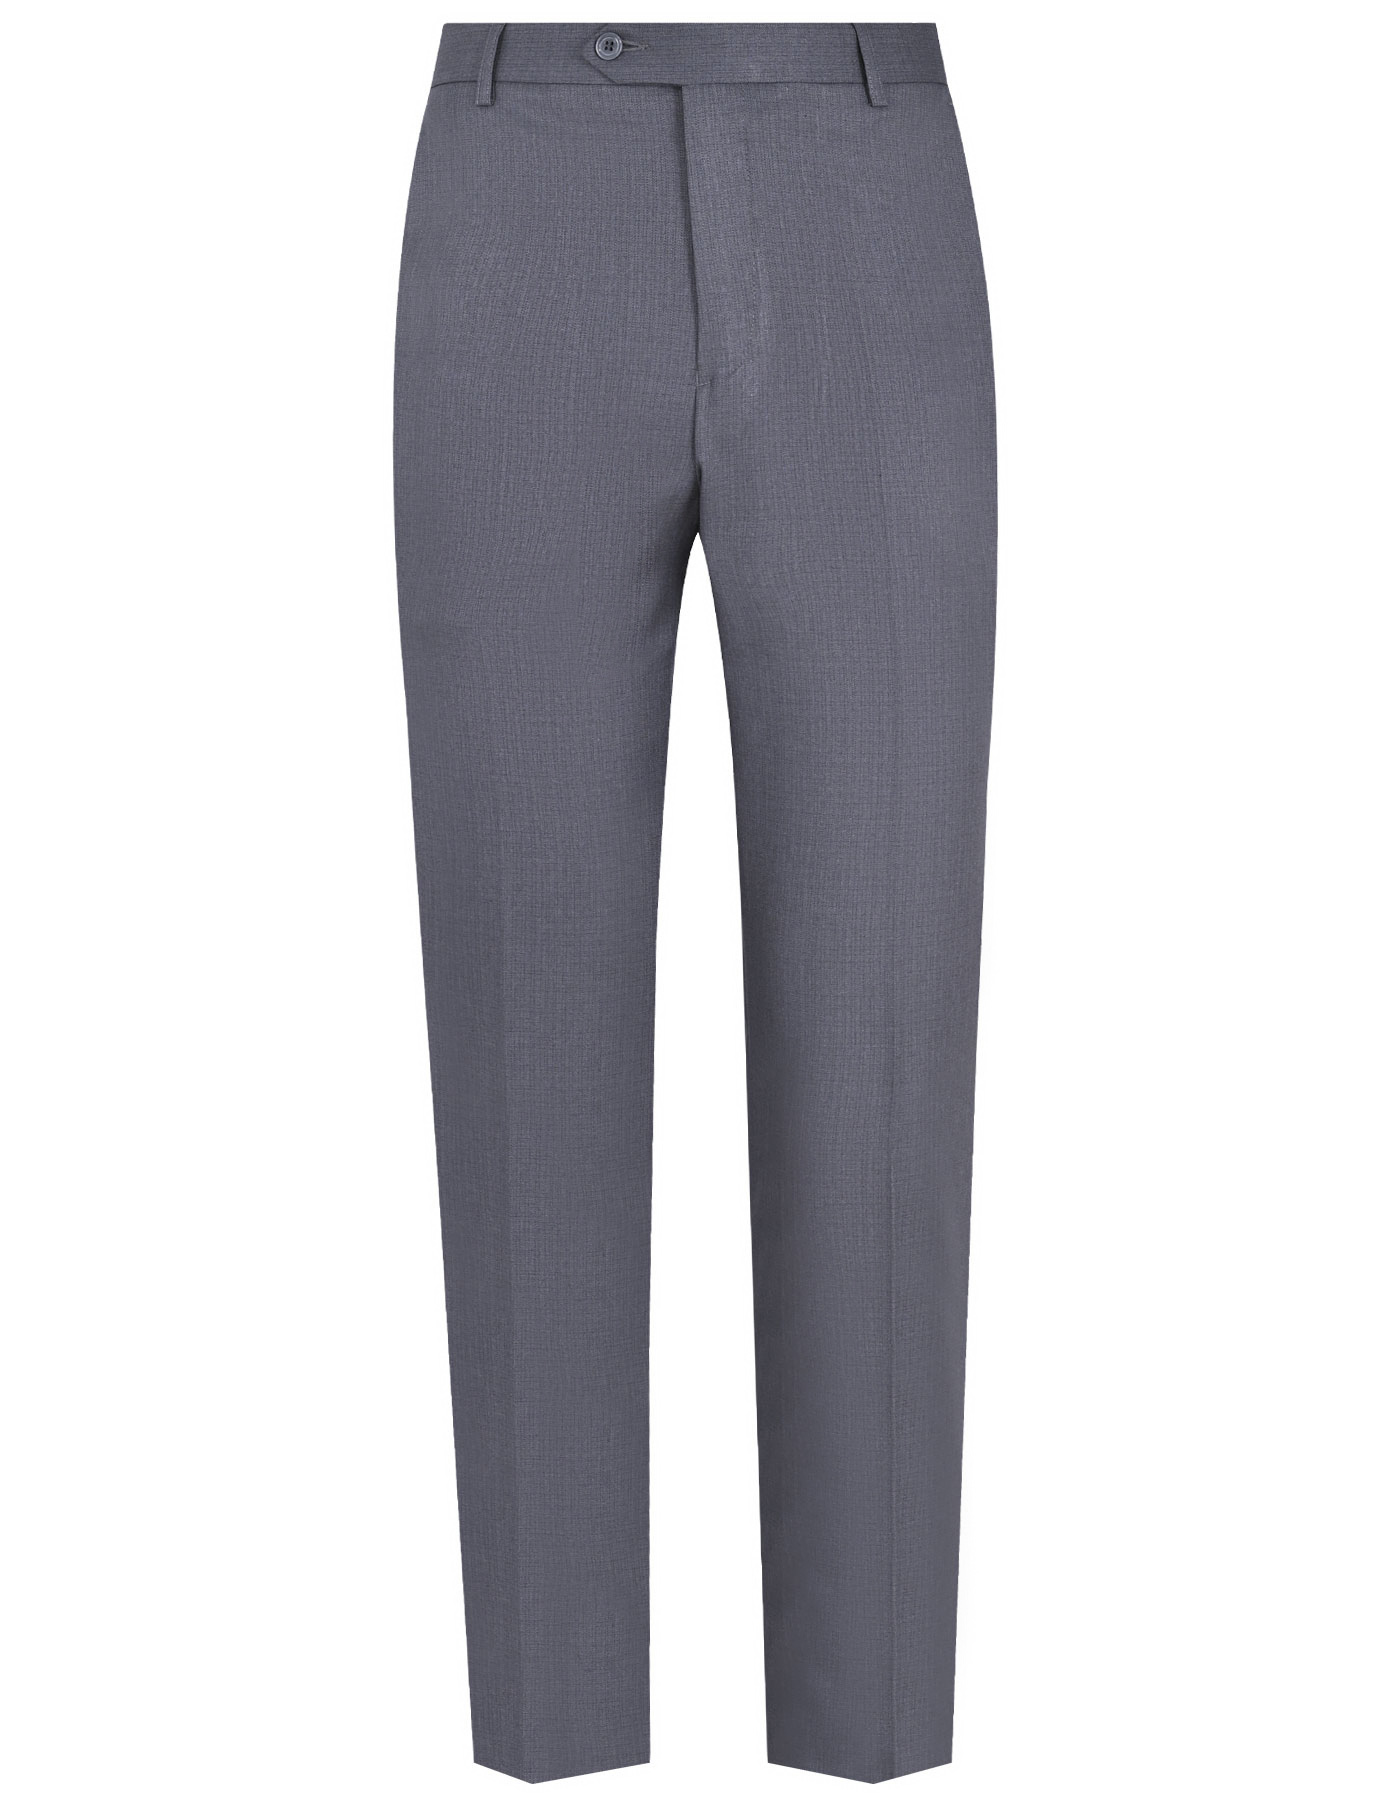 Mens Formal Trousers Online | Dress Pants For Men at Uniworth Shop